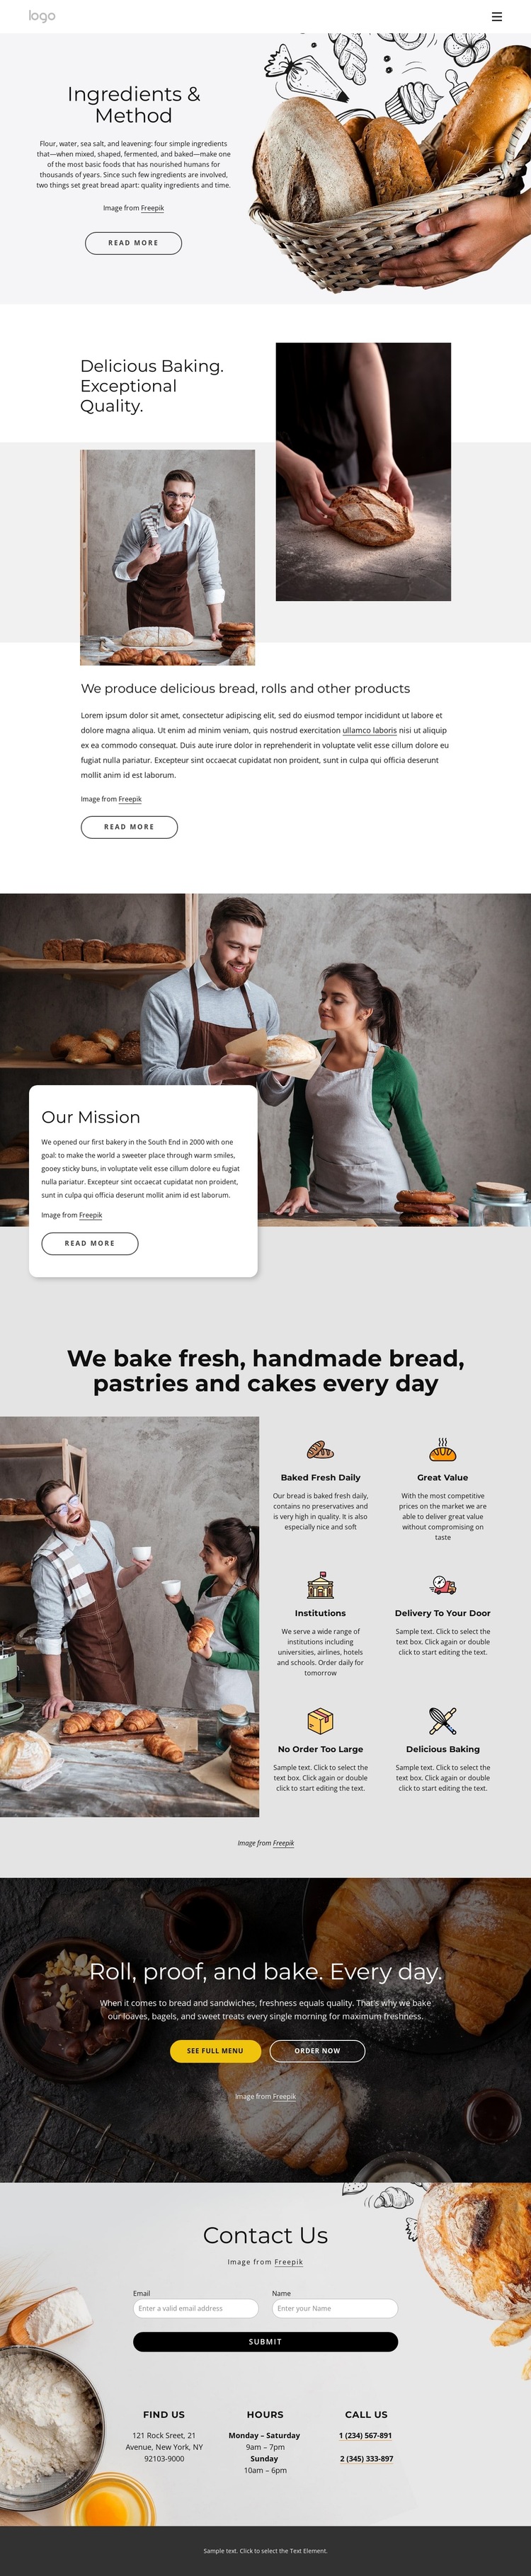 We bake handmade bread HTML5 Template